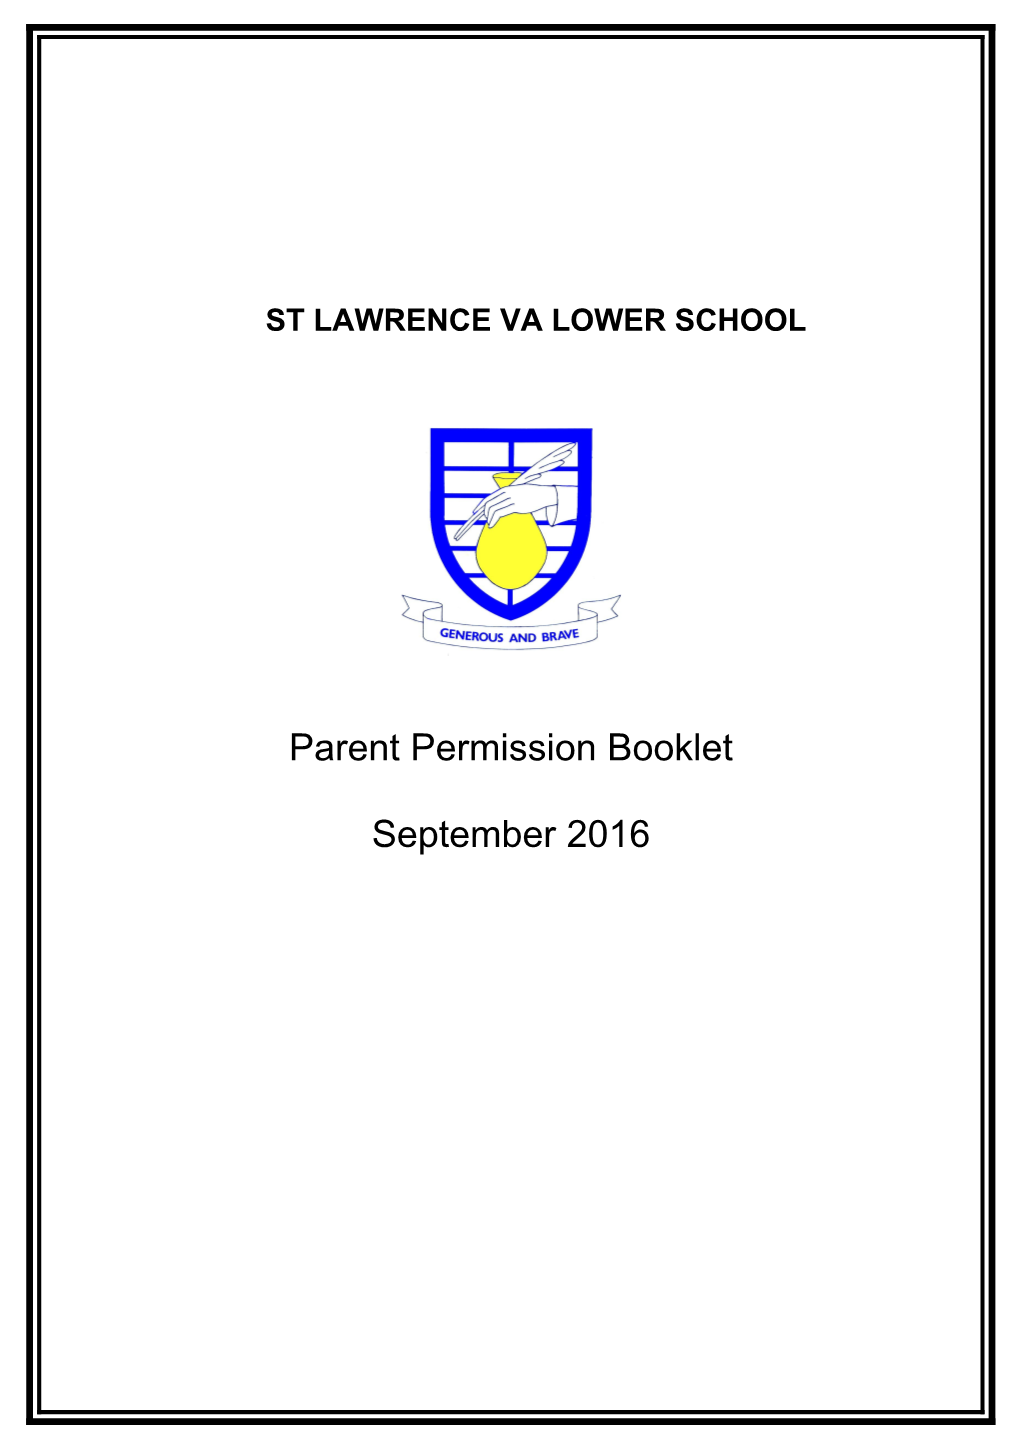 St Lawrence Va Lower School